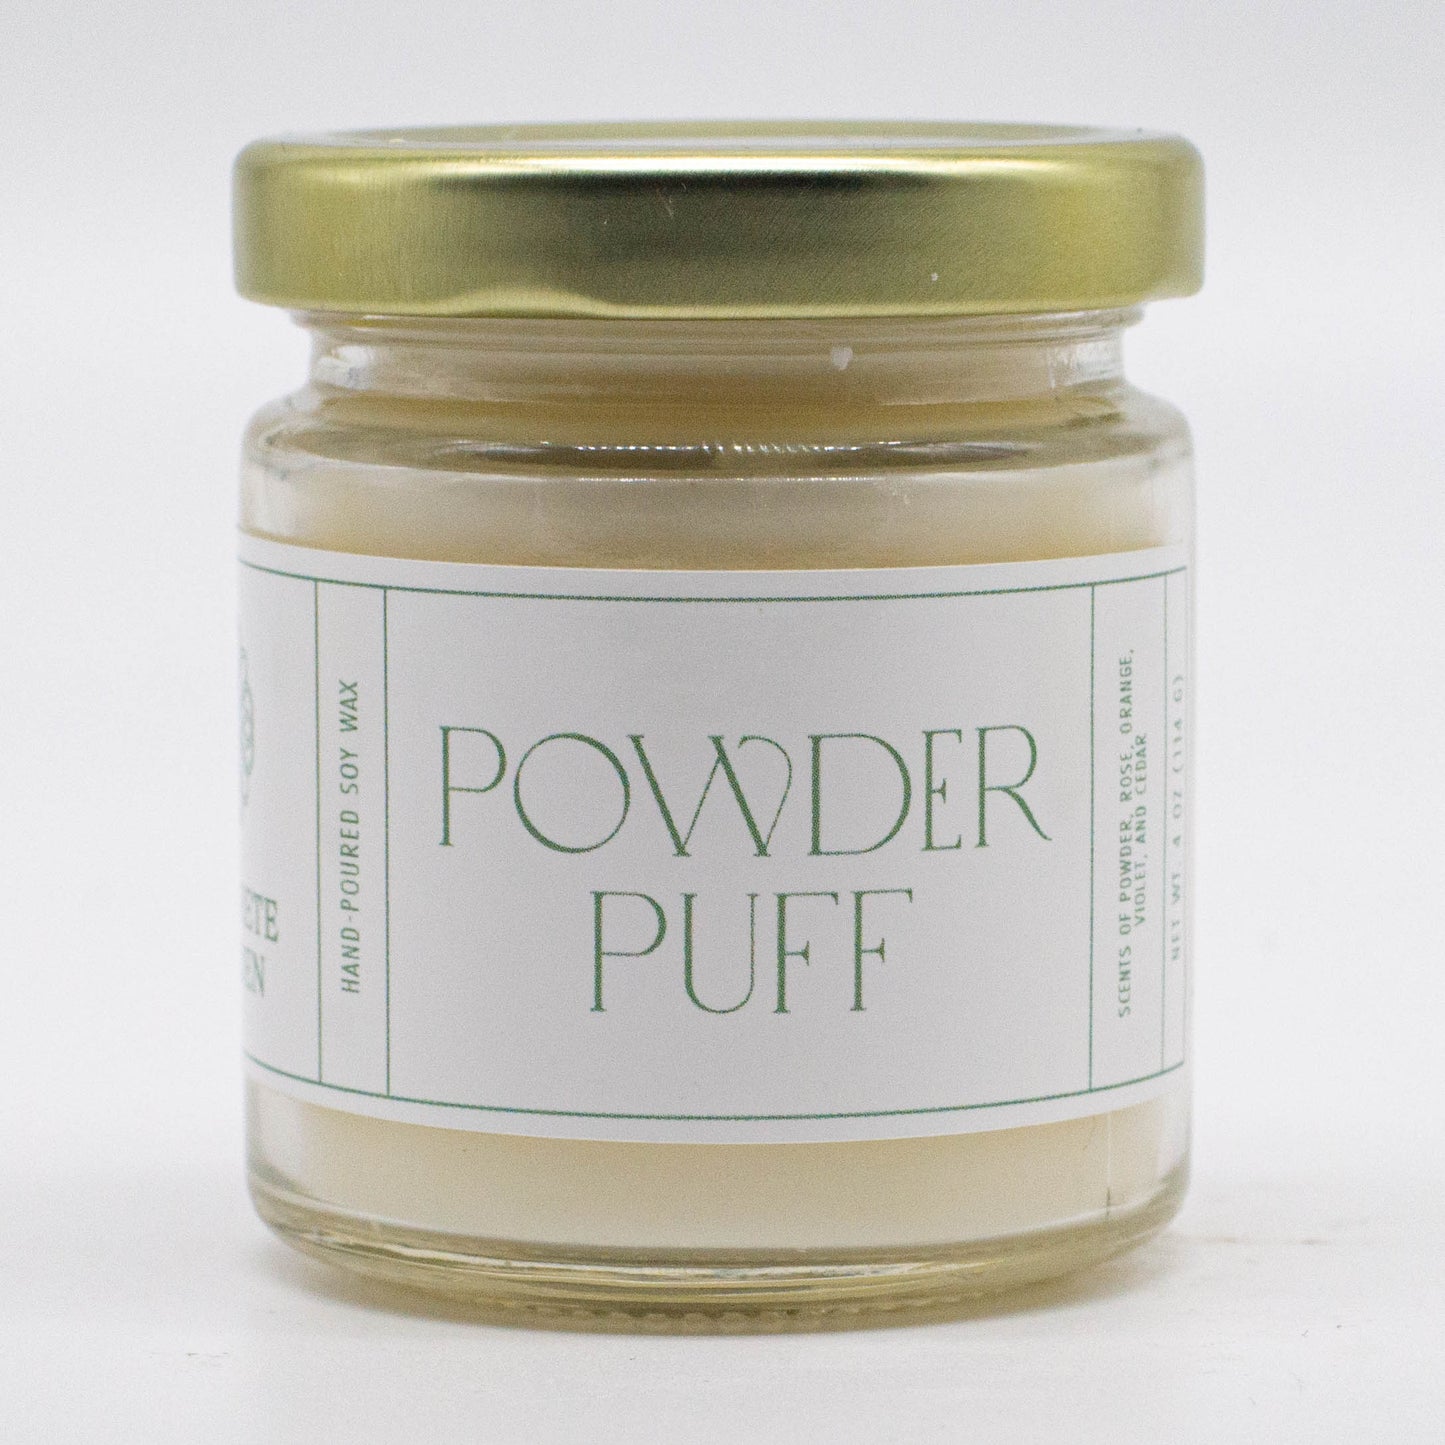 Powder Puff, Powder and Rose Soy Candle, 4 oz